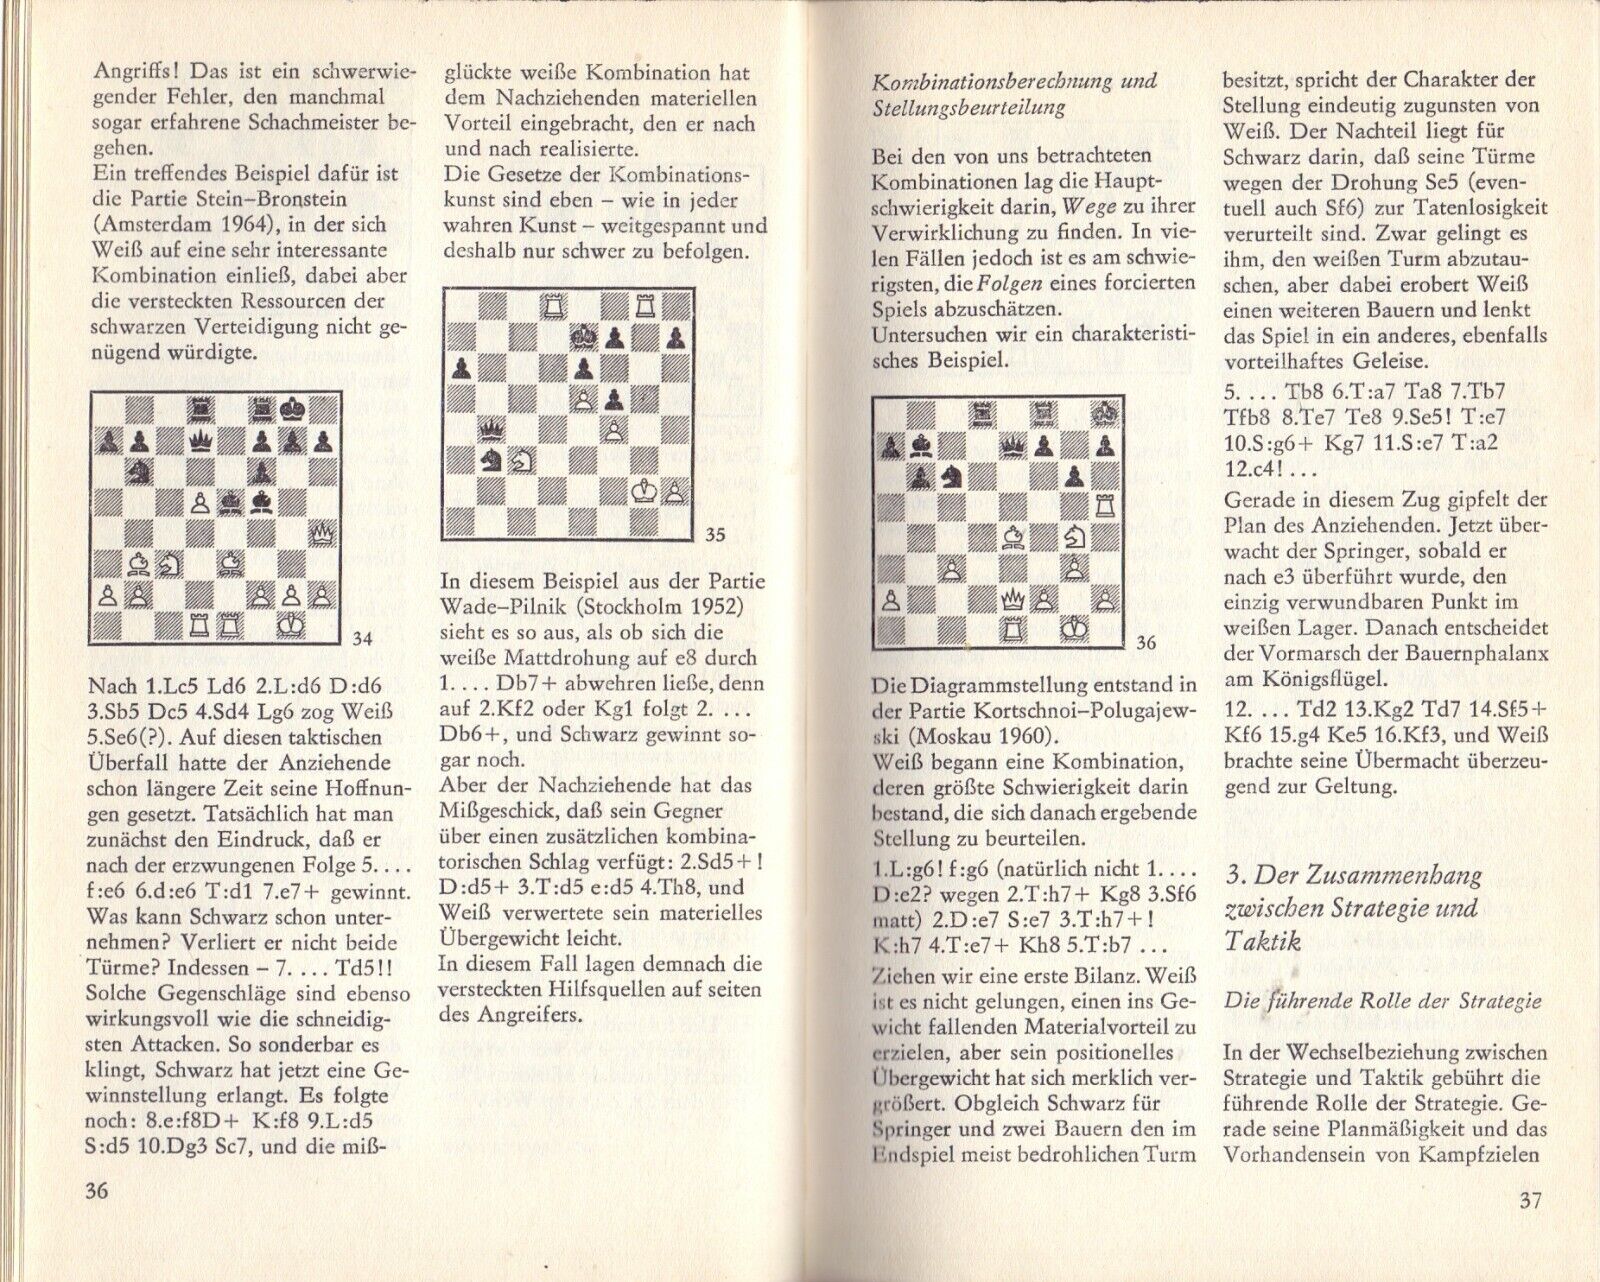 11029.Chess Book signed Suetin to Polugaevsky.Schachlehrbuch Fur fortgeschrittene.1973